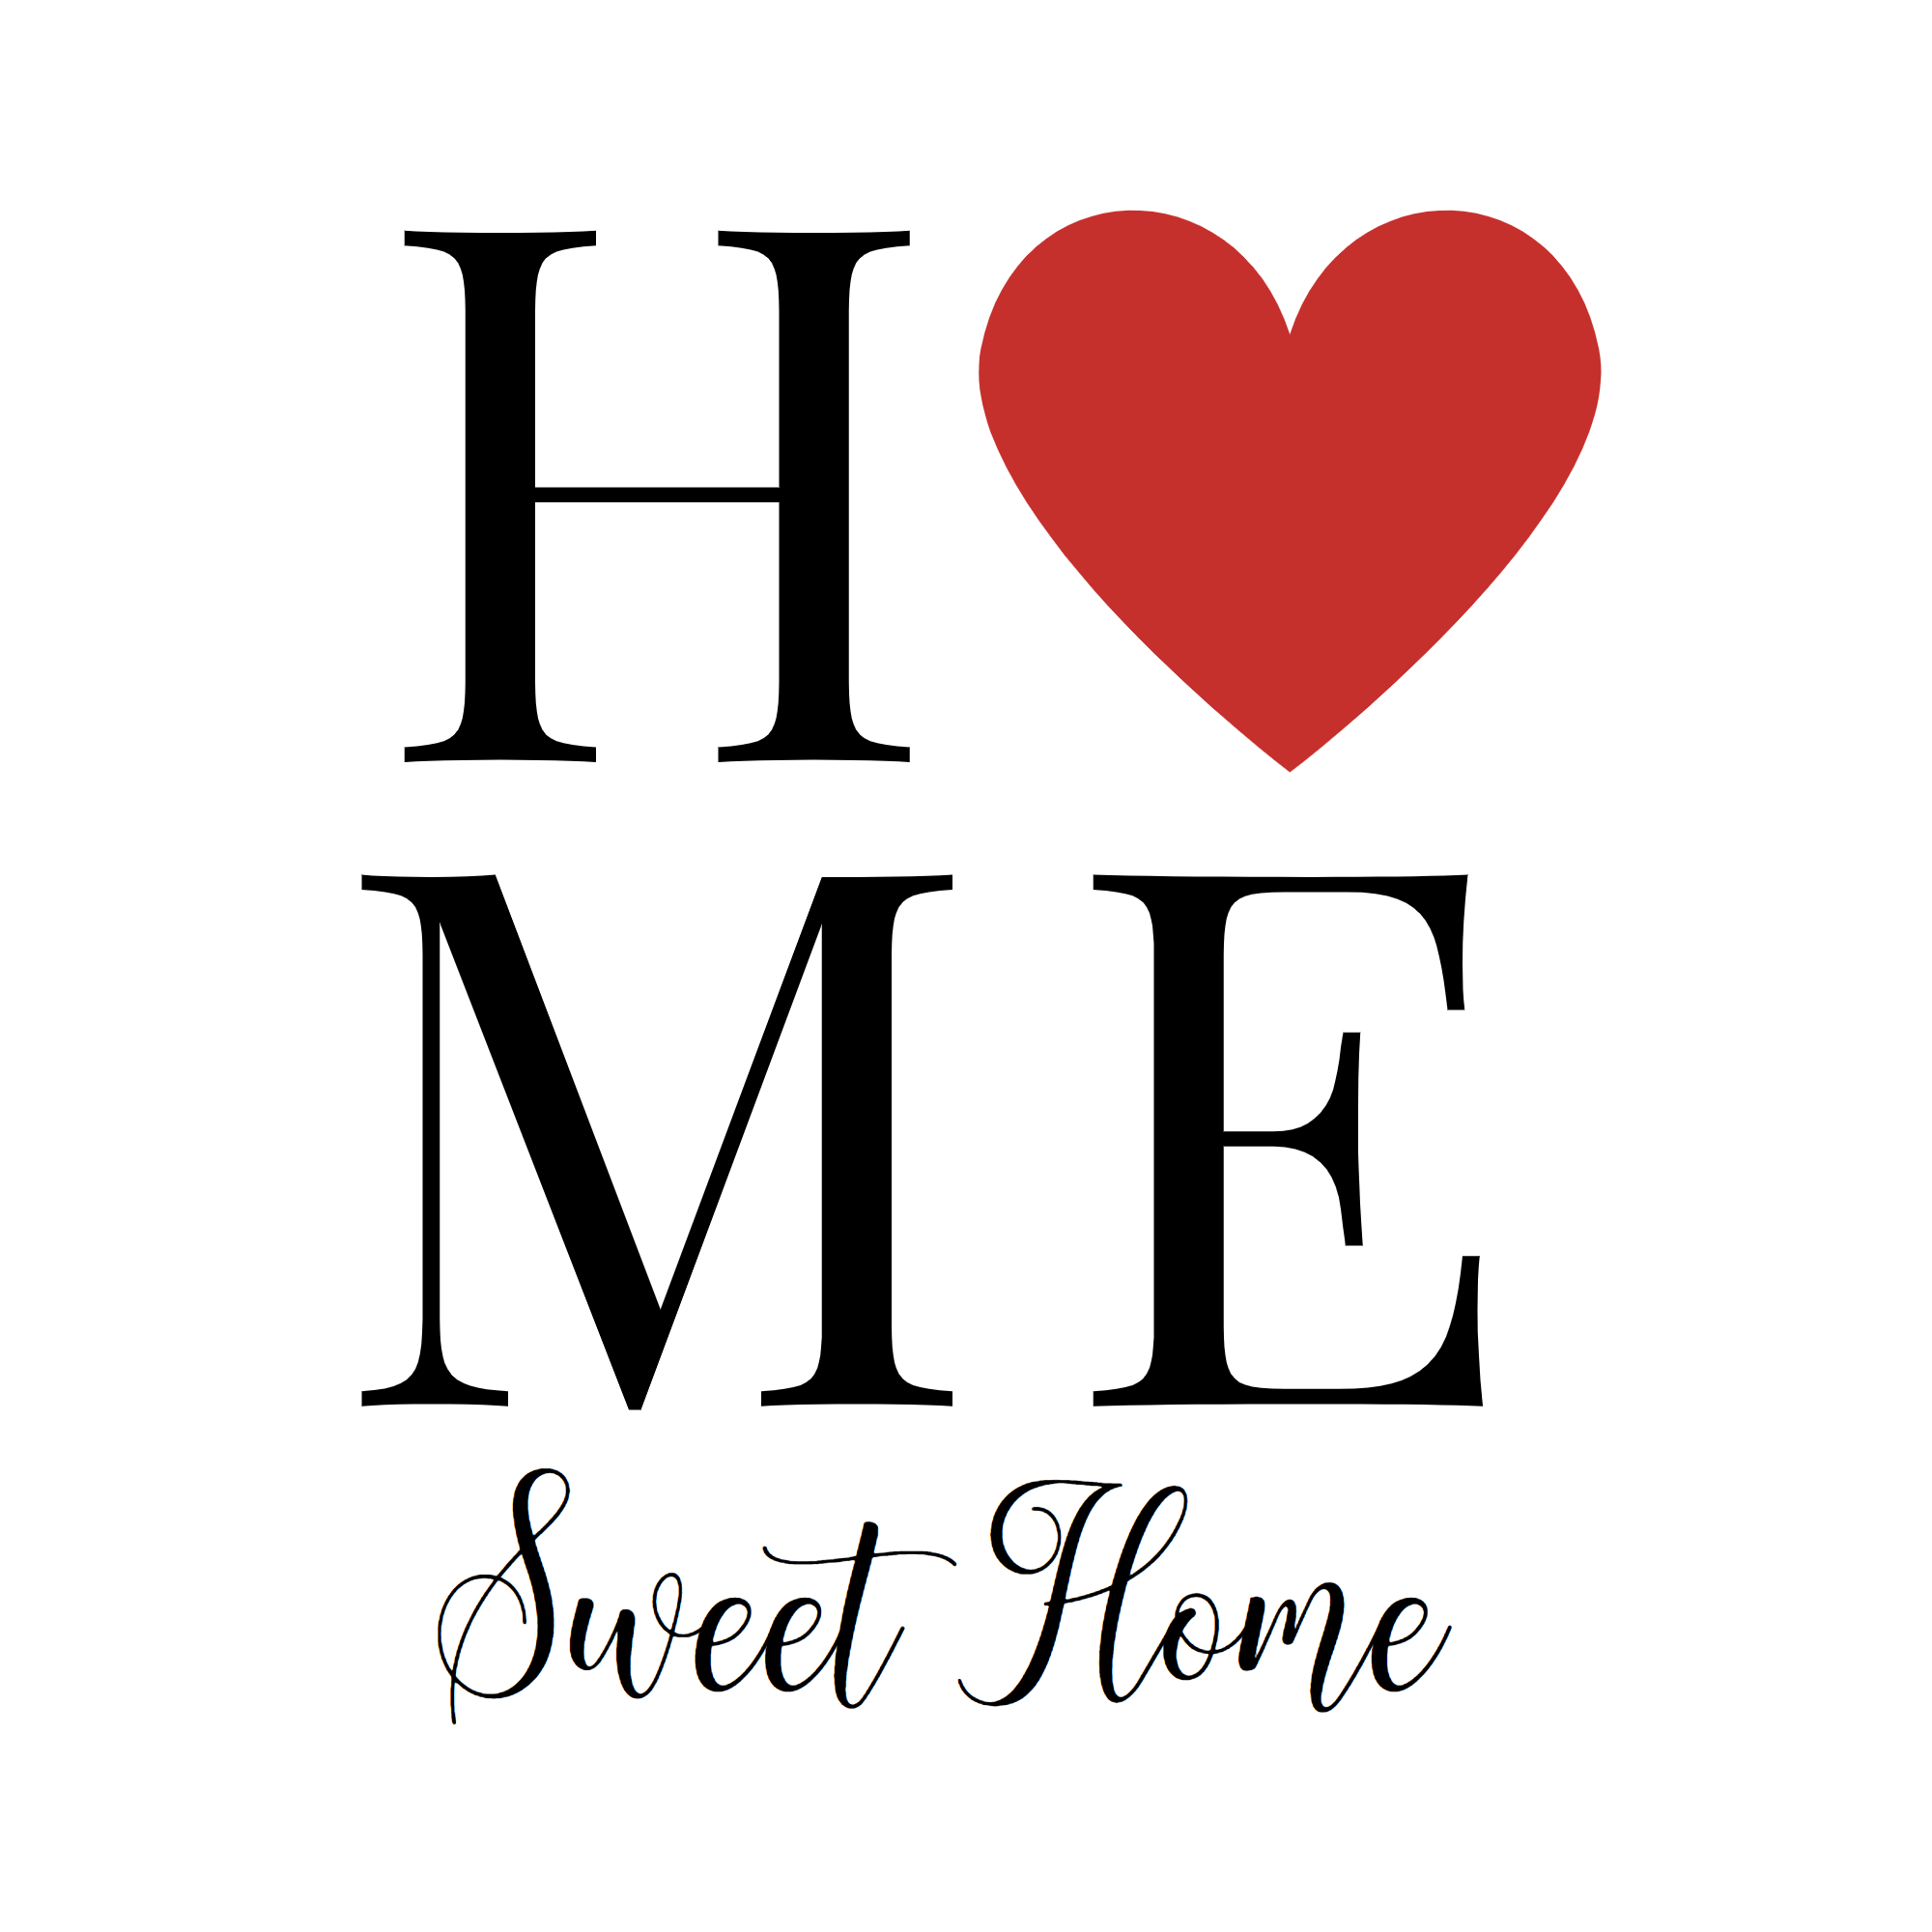 Set of 8 Home Sweet Home prints